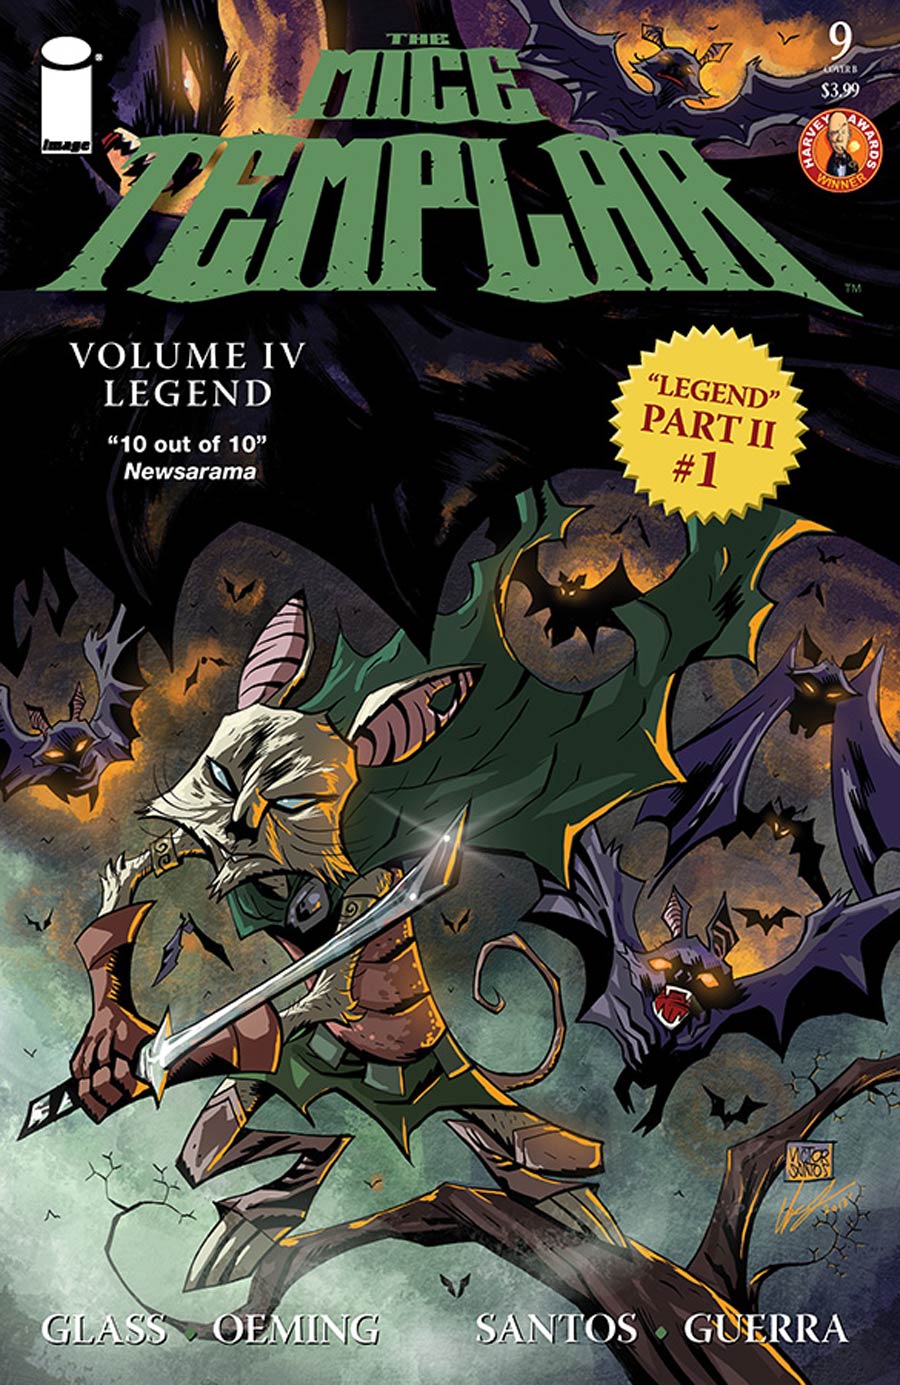 Mice Templar Vol 4 Legend #9 Cover B Victor Santos & Chandra Free